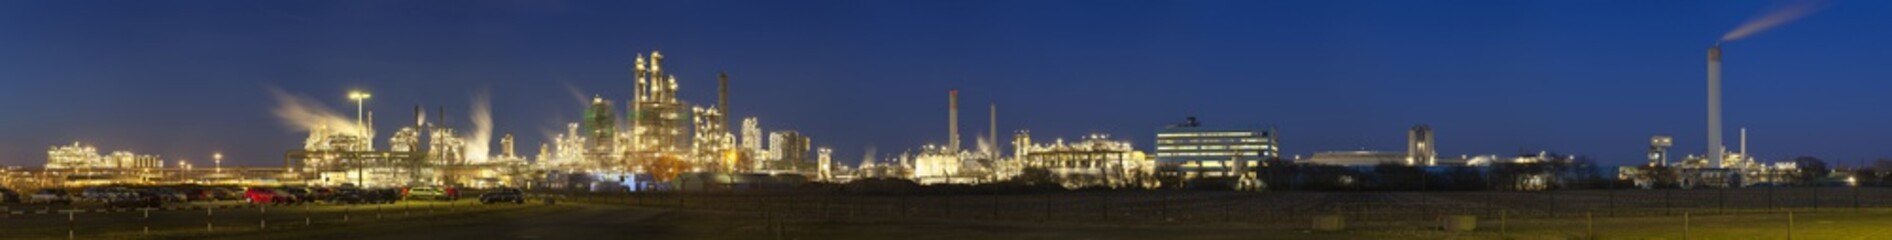 Refinery Panorama At Night